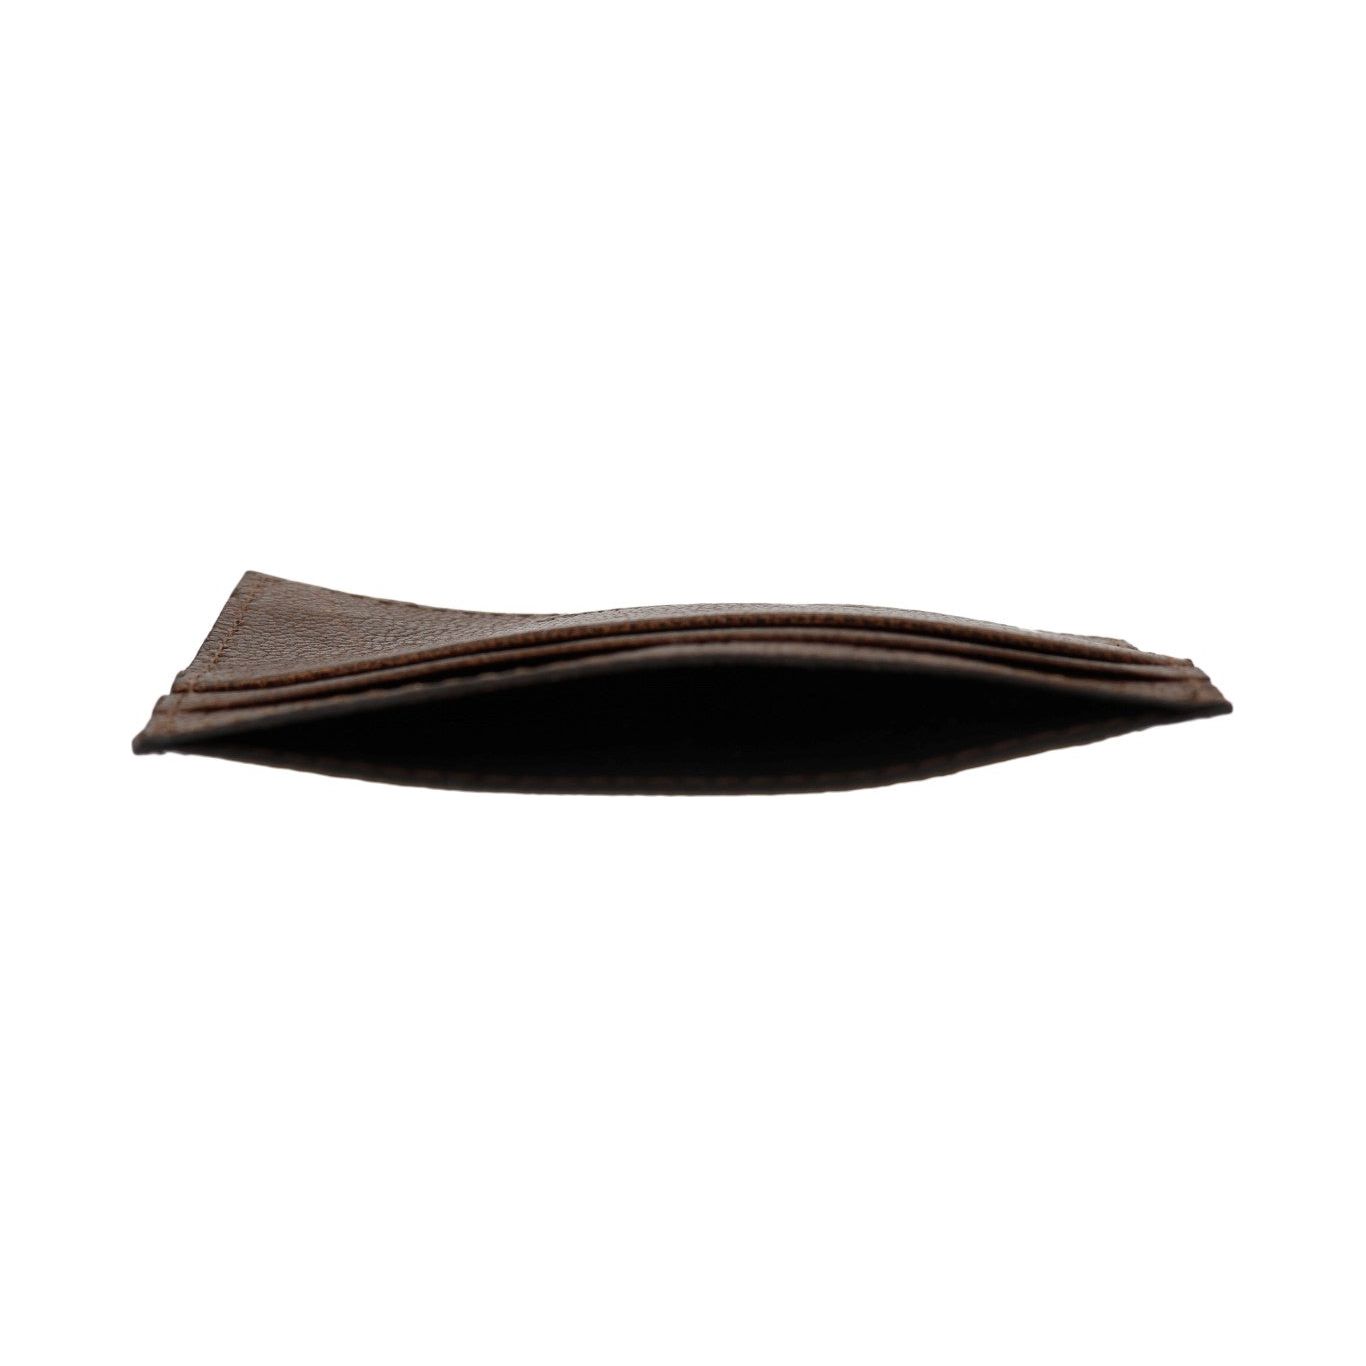 Billionaire Italian Couture Elegant Leather Men's Wallet in Brown Wallet brown-leather-cardholder-wallet